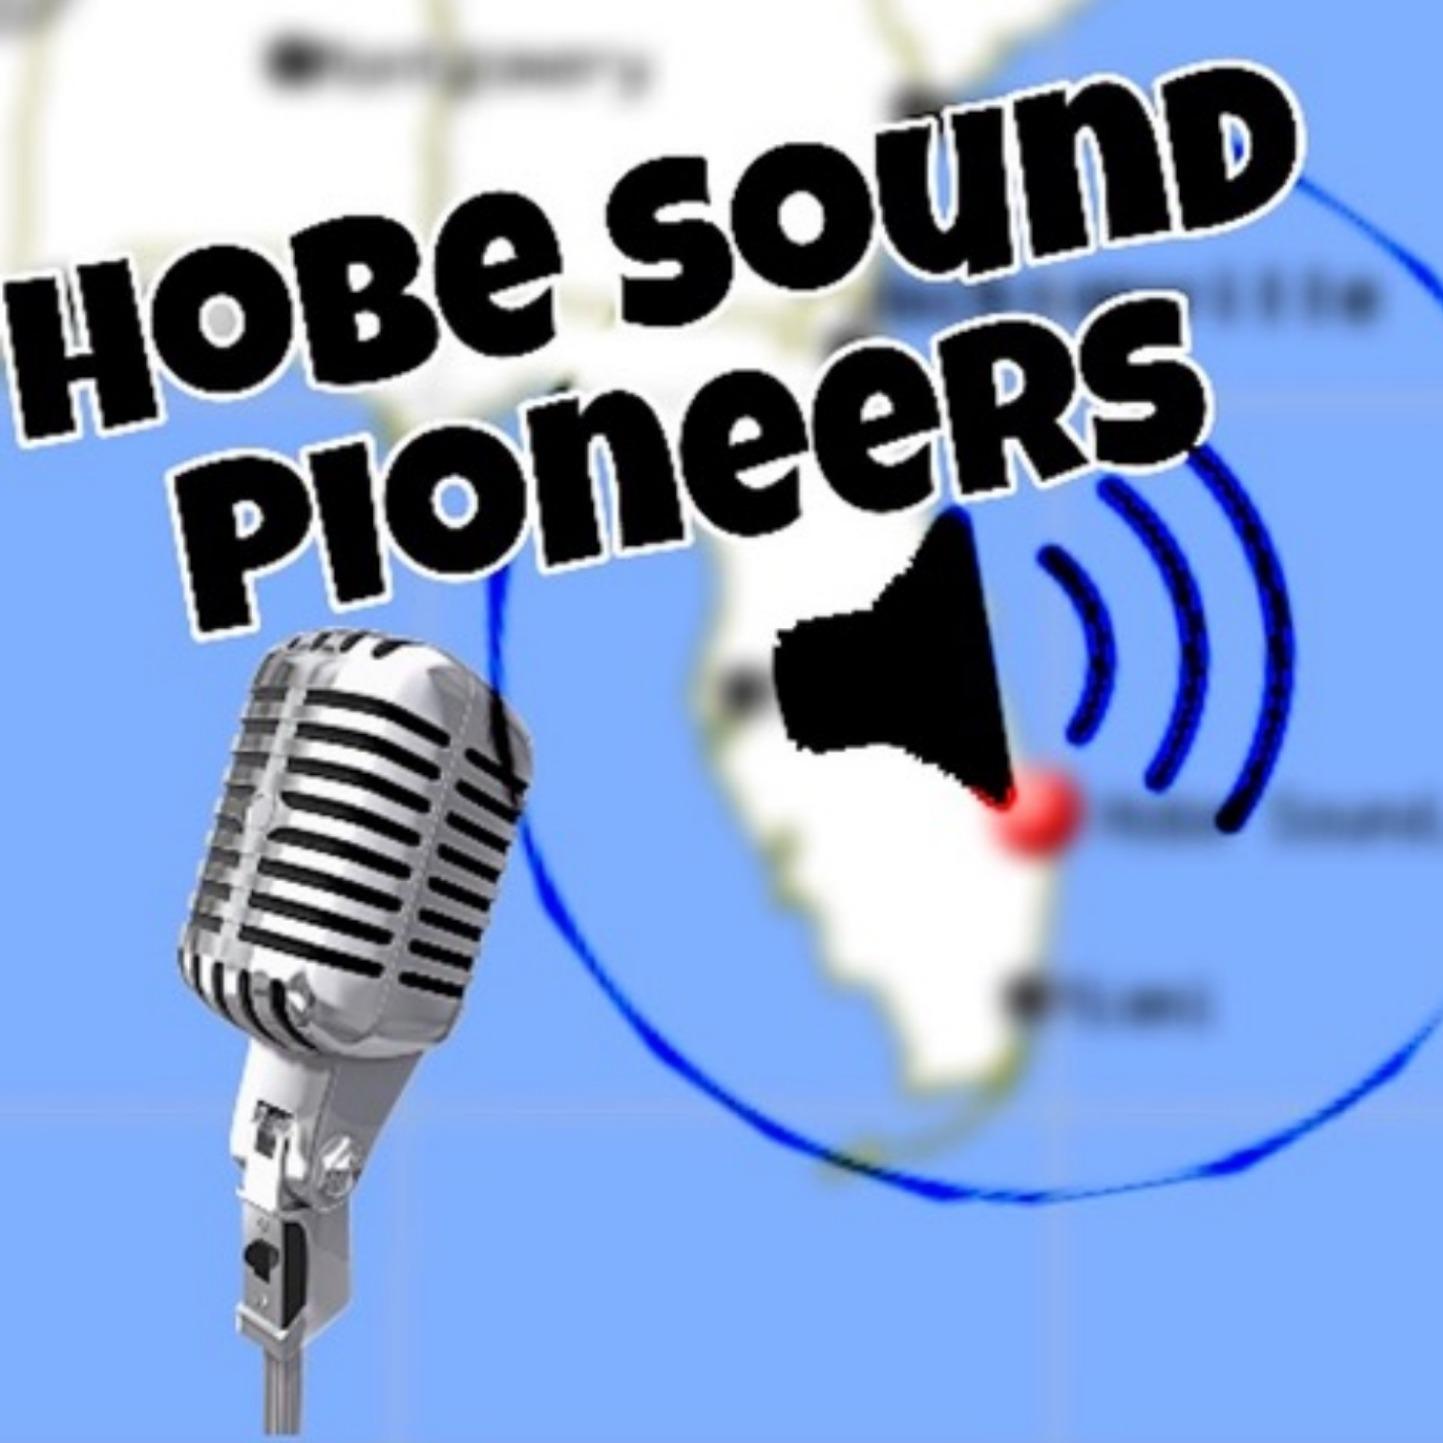 Hobe Sound Pioneers